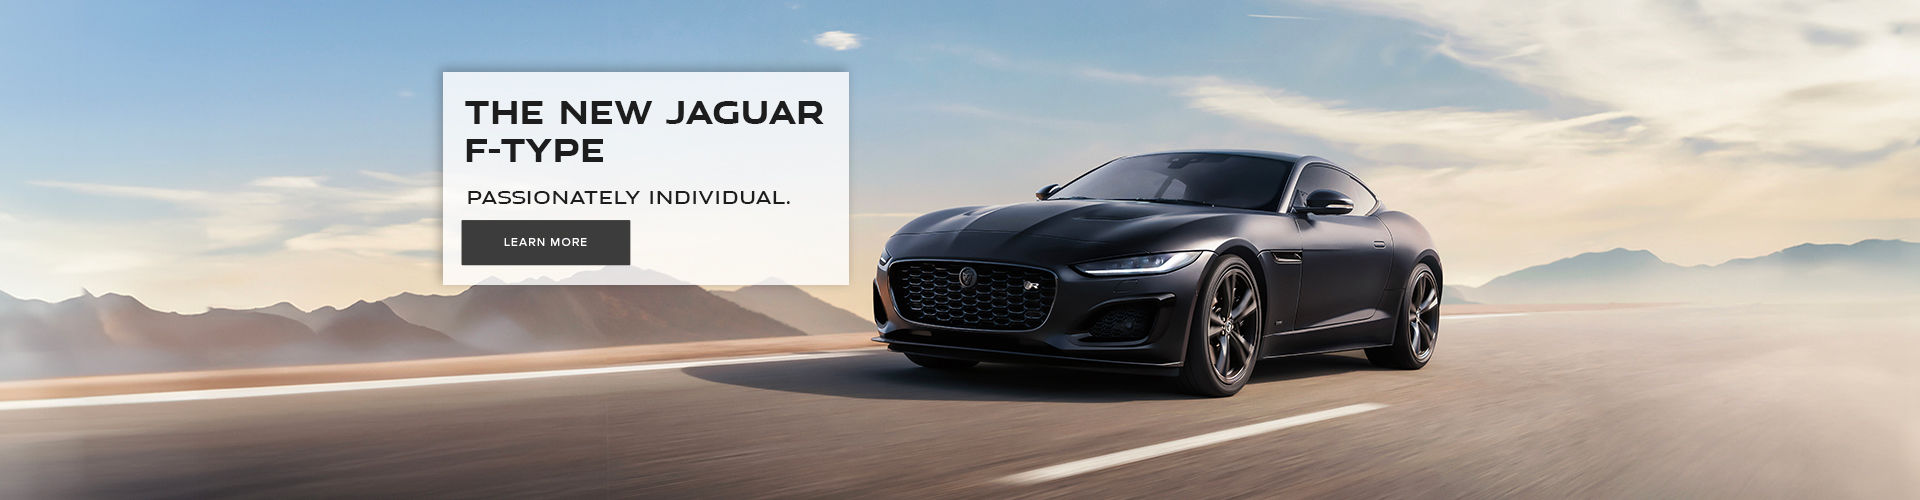 The new jaguar f-type